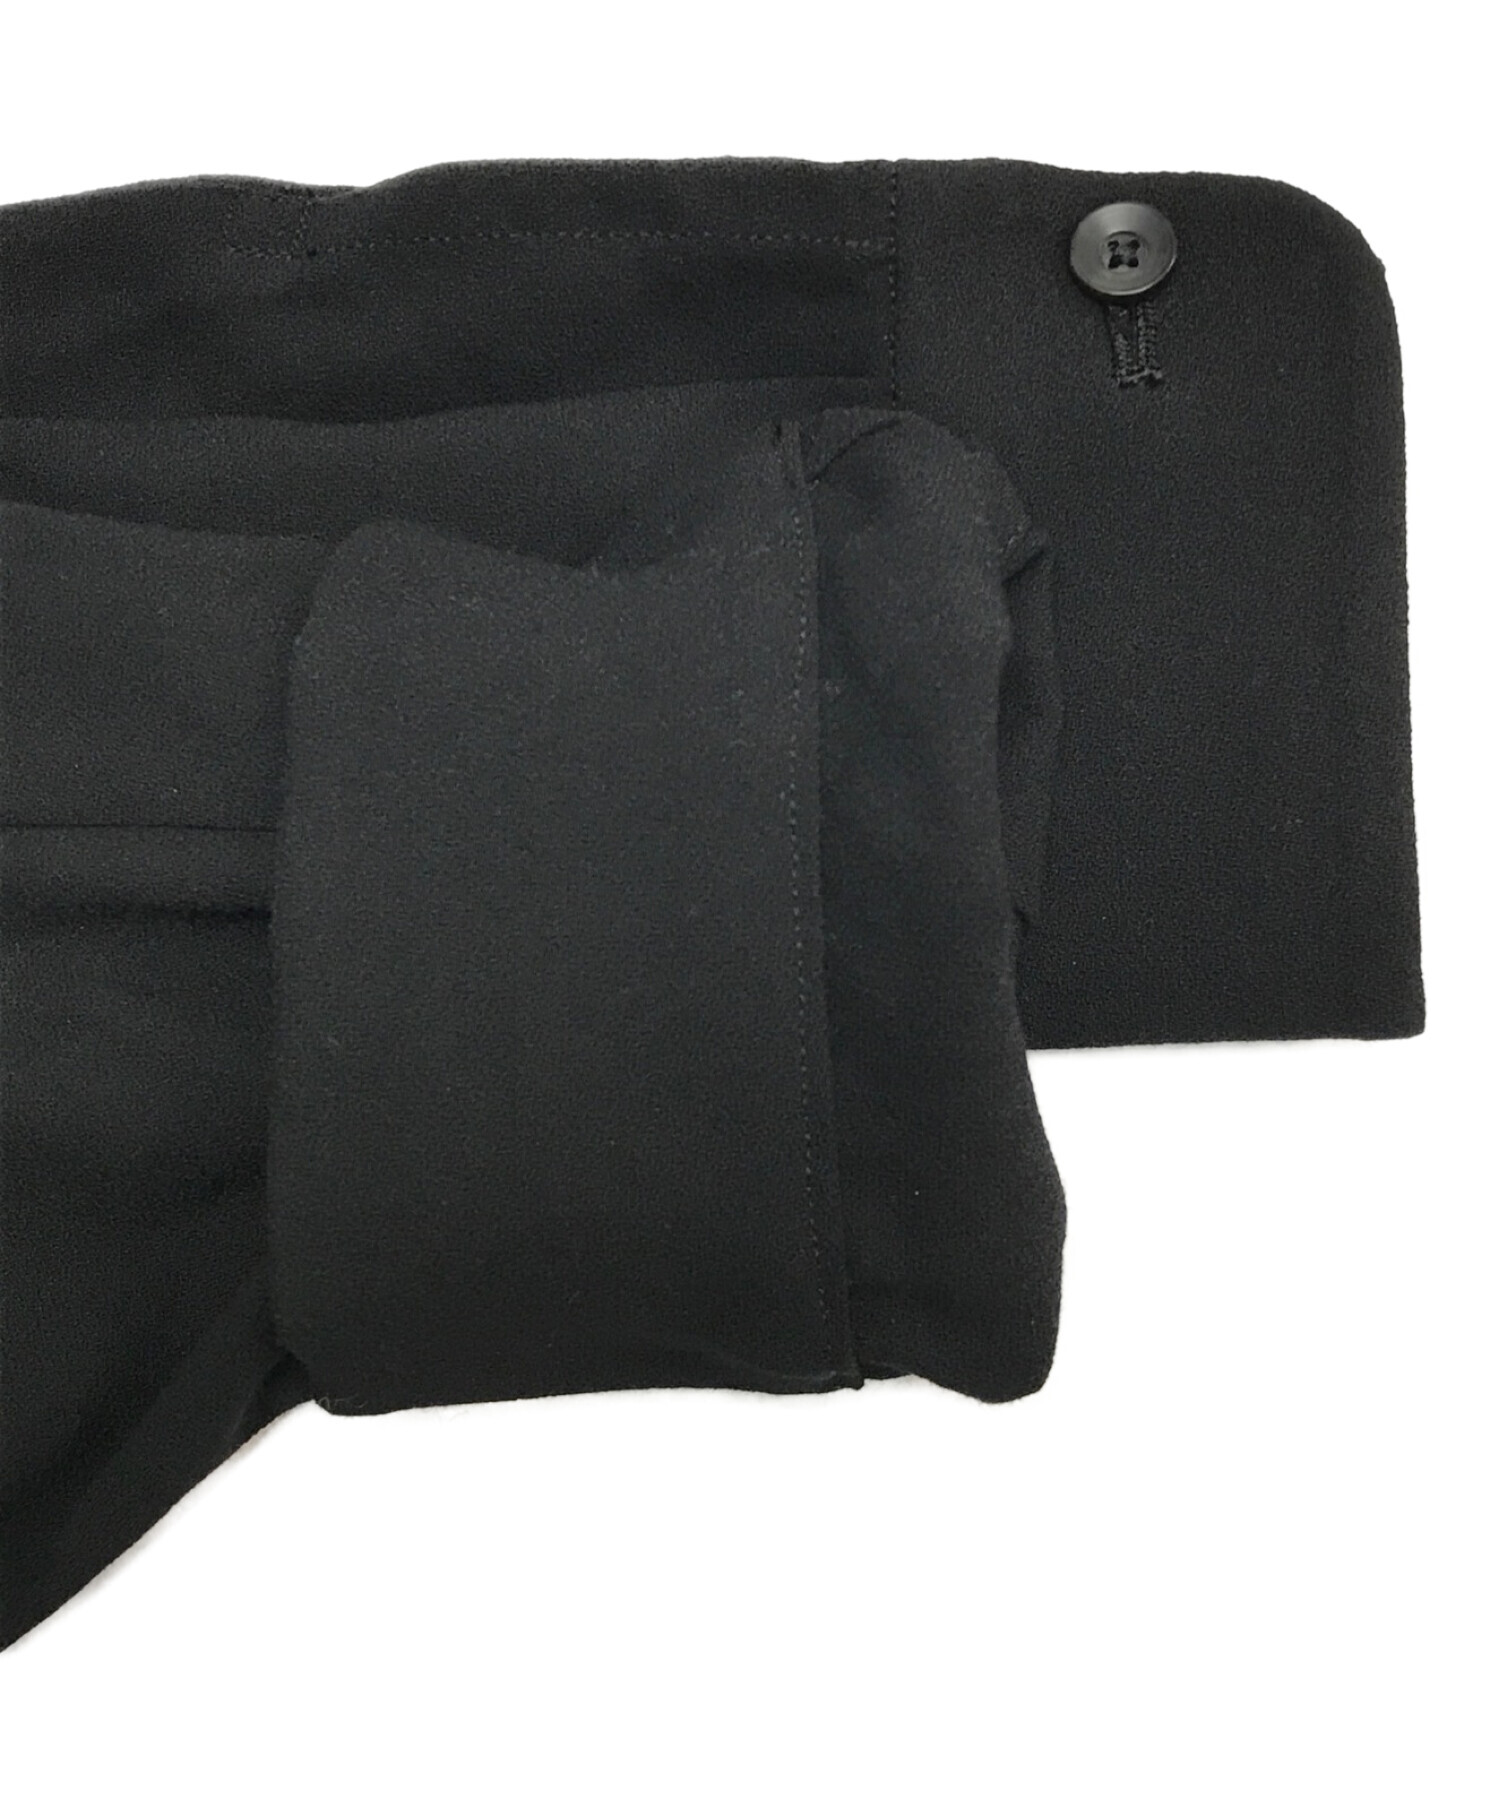 ETHOSENS (エトセンス) Shift collar coat shirt/シフトカラーコートシャツ/ロングシャツコート ブラック サイズ:1